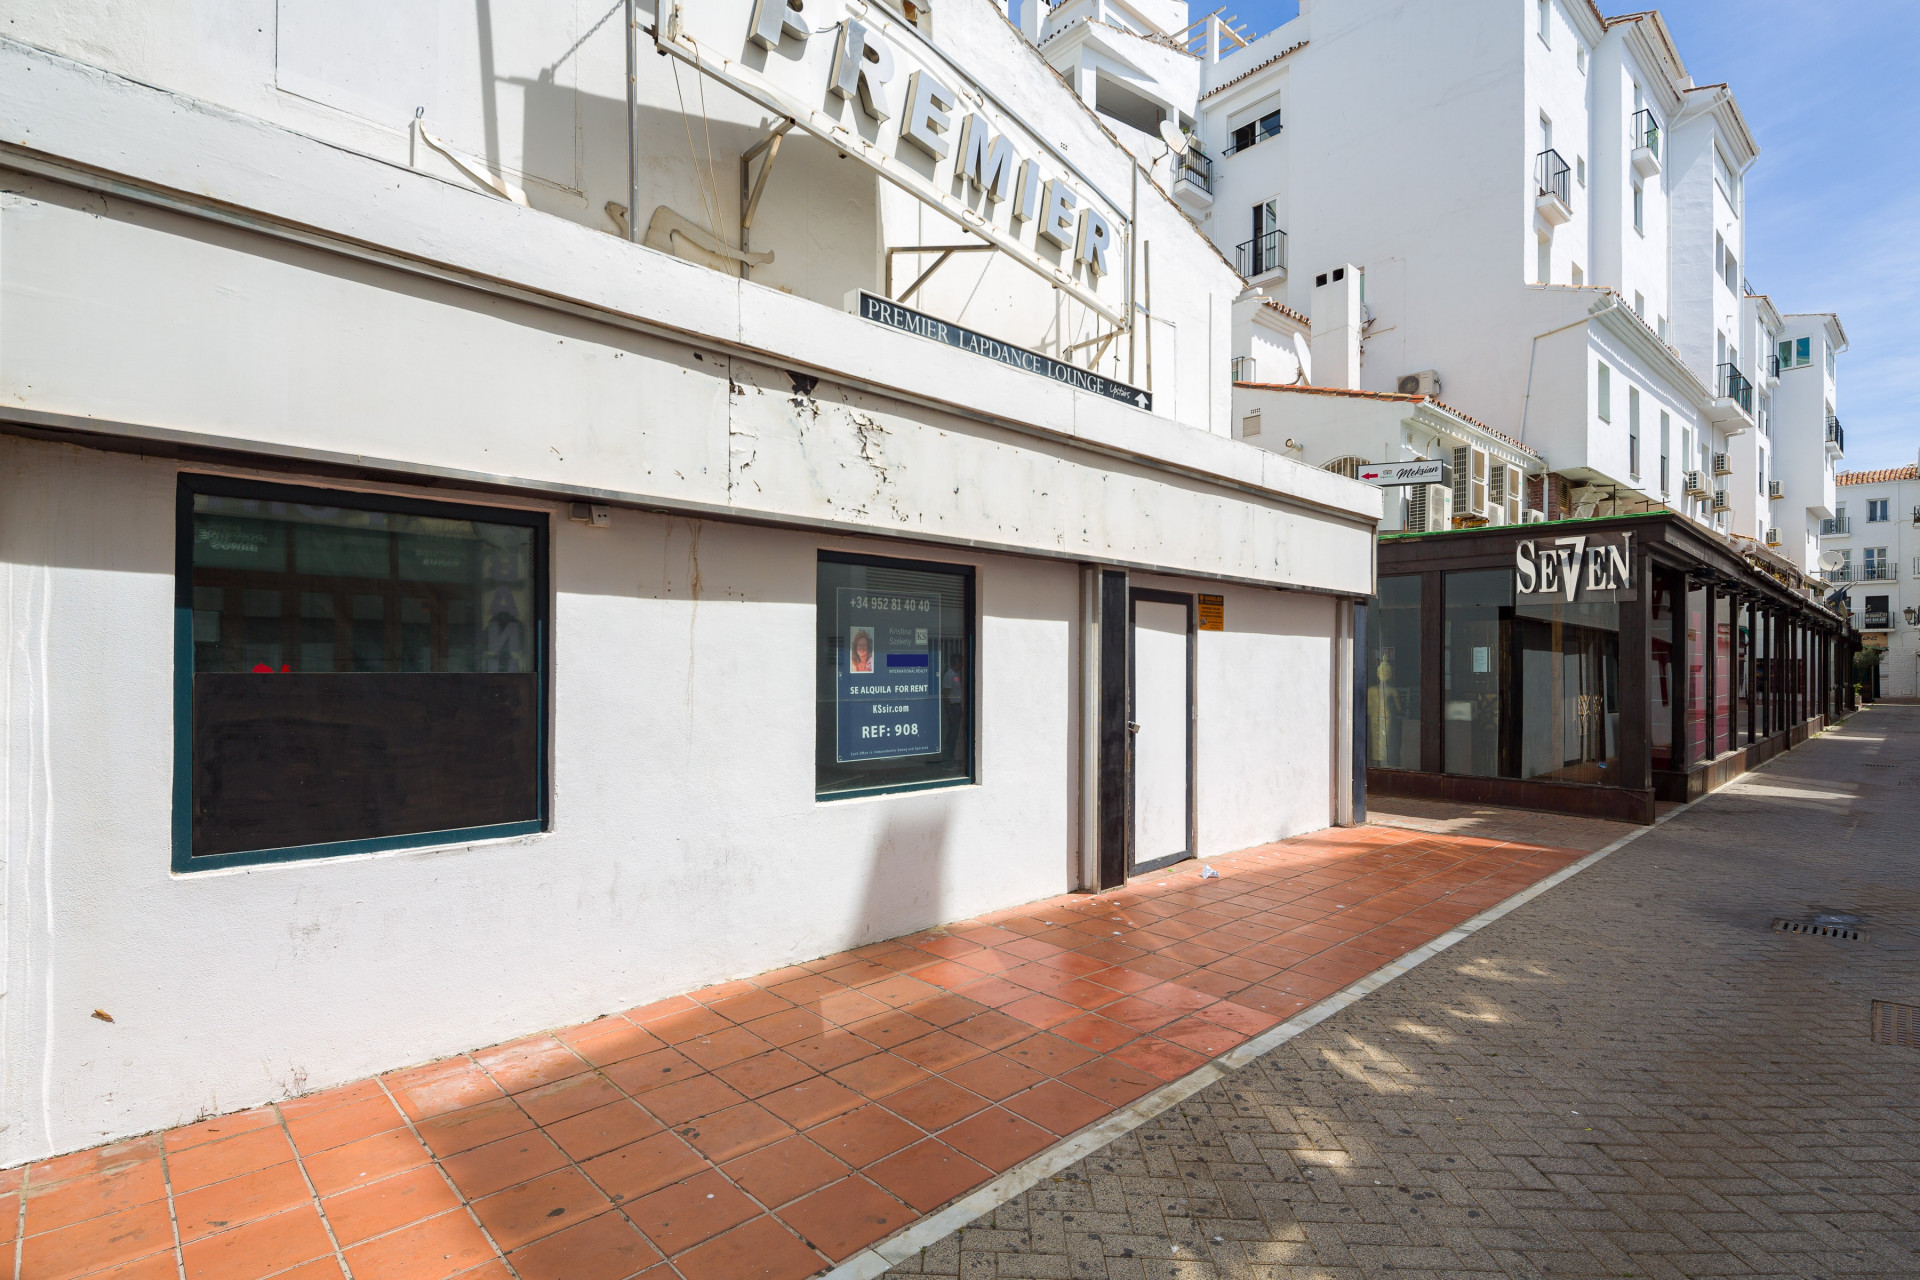 Commercial Premises in good conditions in Puerto, Puerto Banus, Marbella